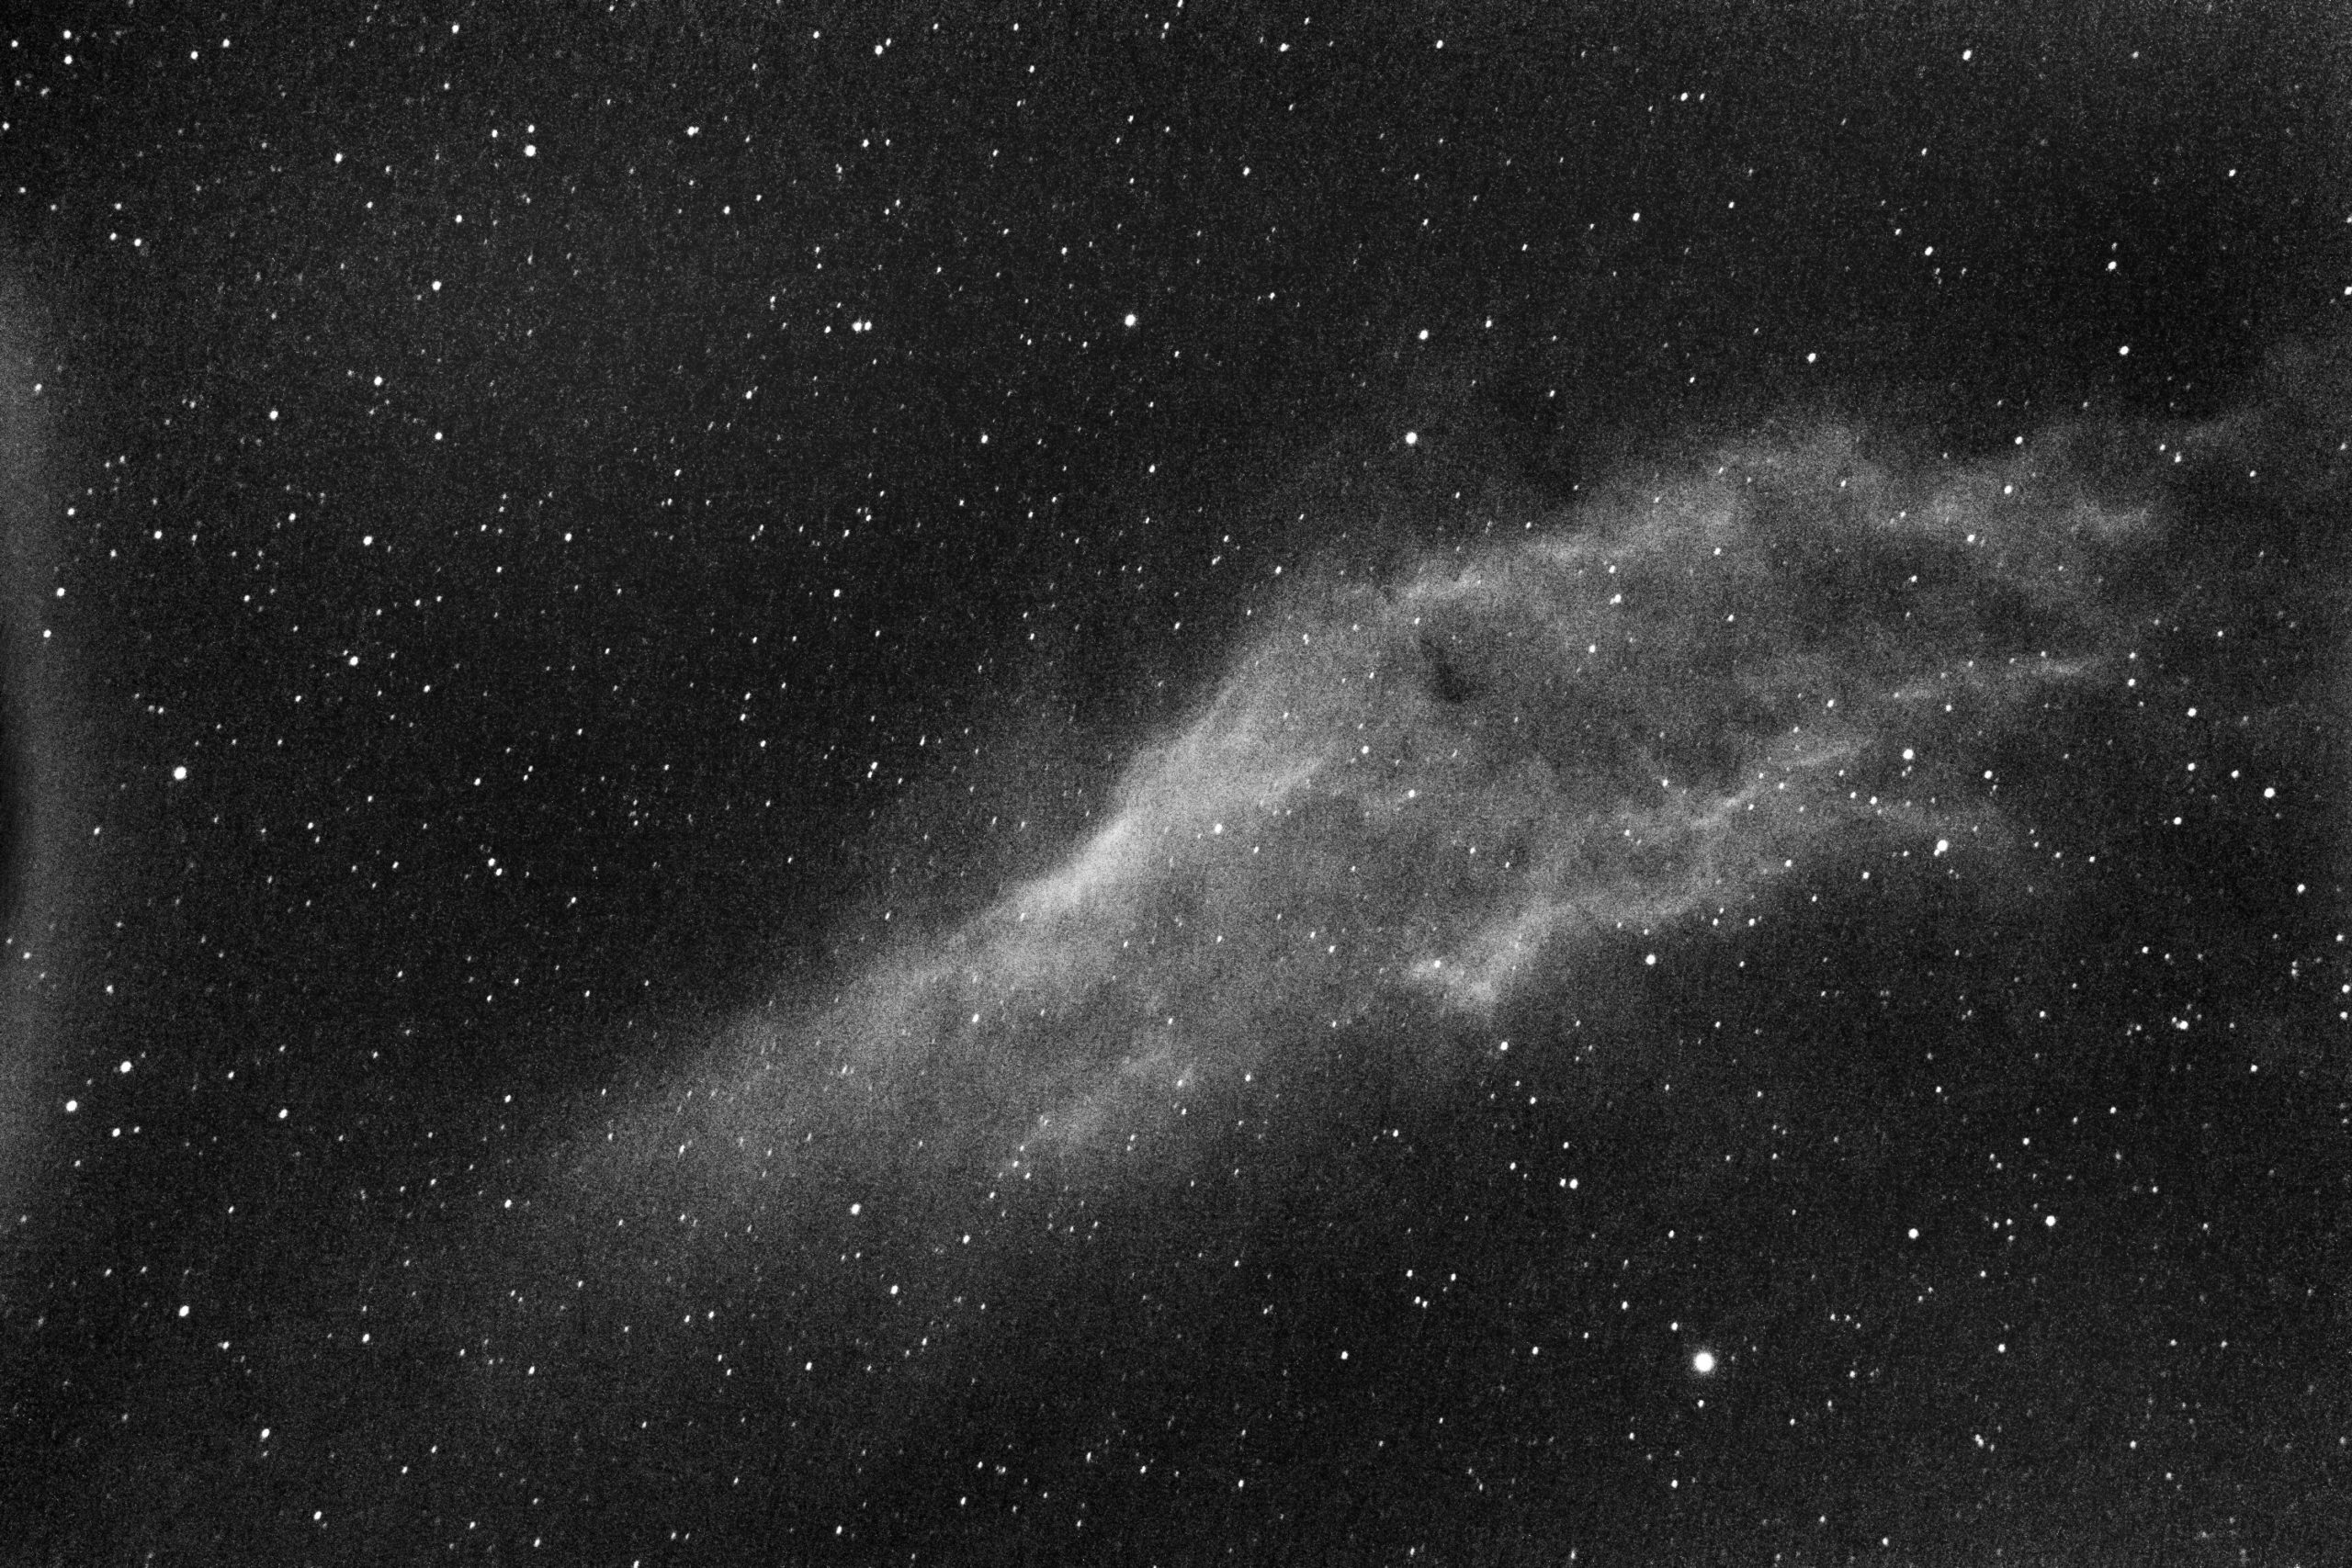 California nebula in H-alpha taken with Fuji X-T20.